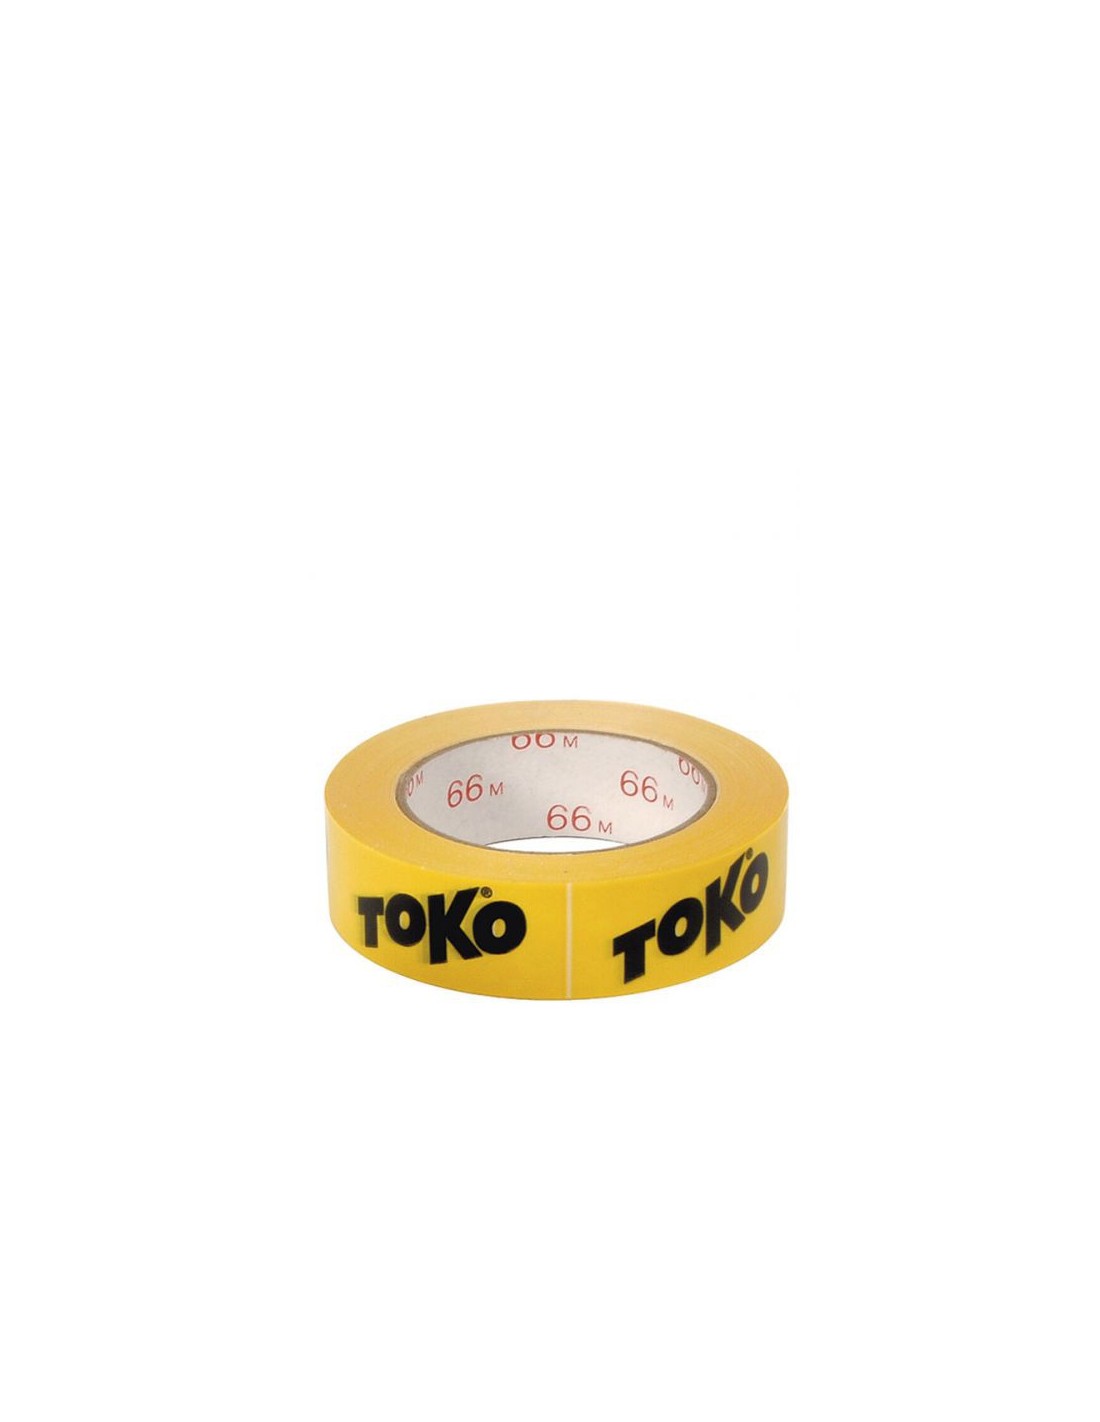 Toko Adhesive Tape von Toko